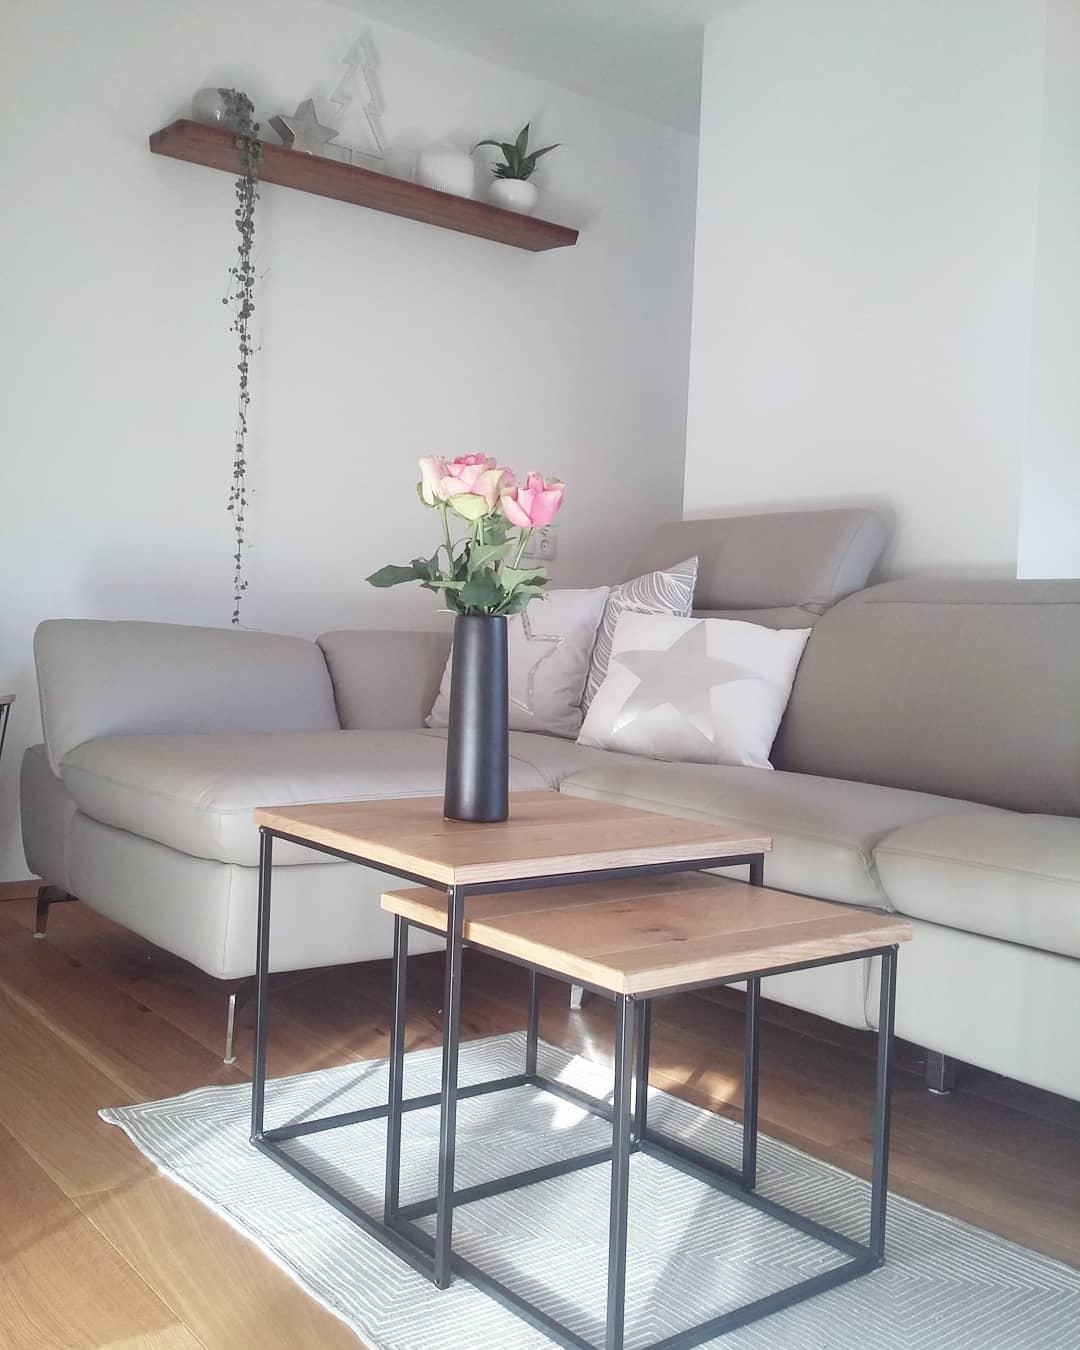 #wohnzimmer #flowers #couch #whitehome #nordichome #scandihome #myhomestyle #dekoideen #hygge #freshflowers
#livingroom